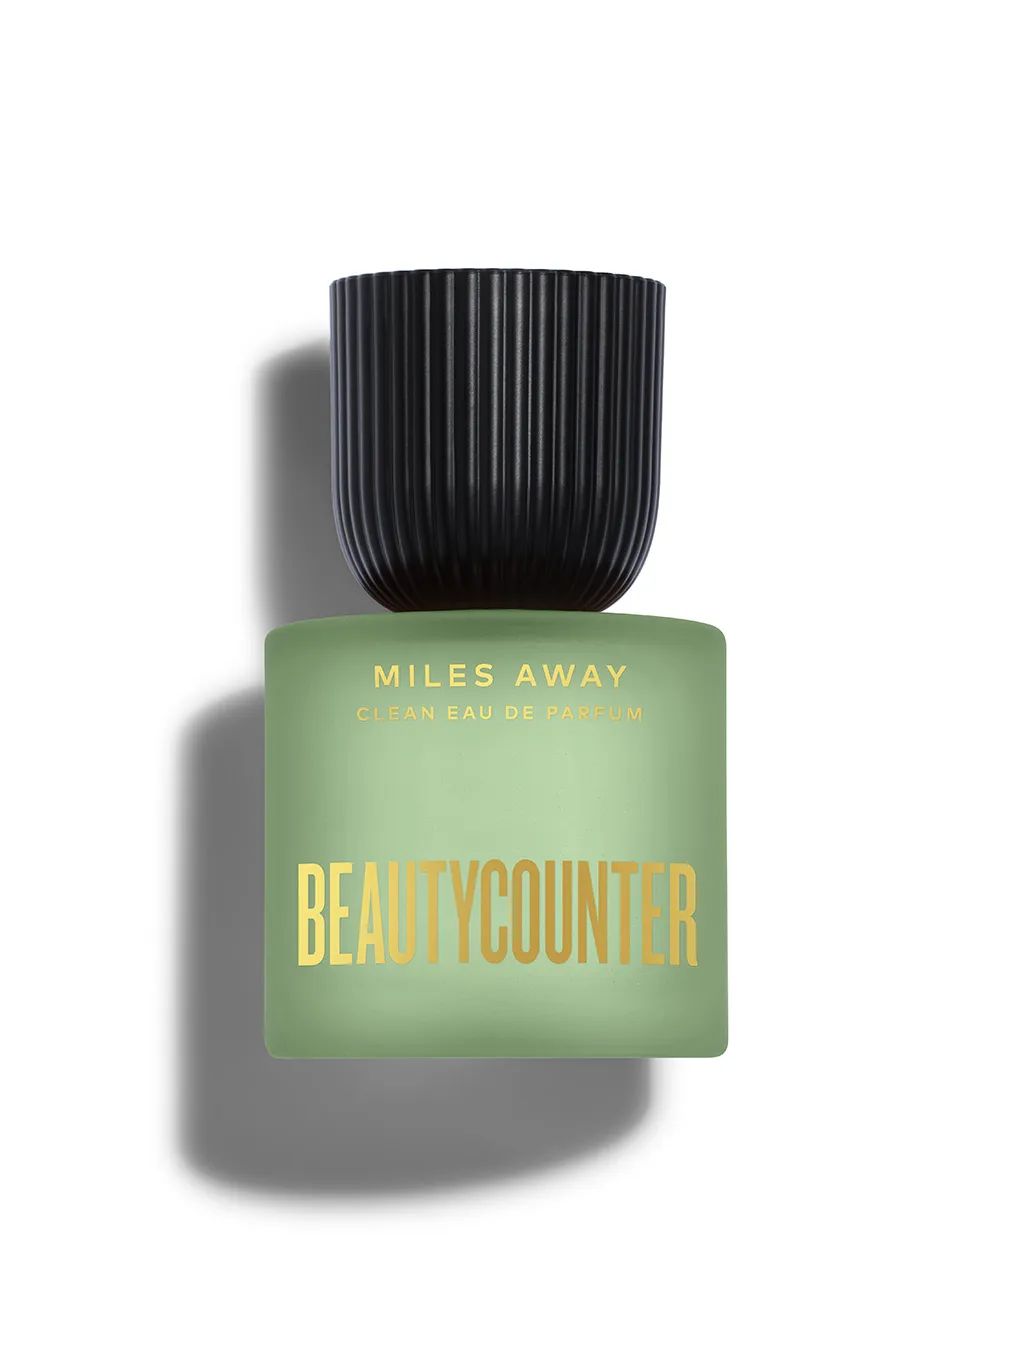 Miles Away Clean Eau De Parfum | Beautycounter.com